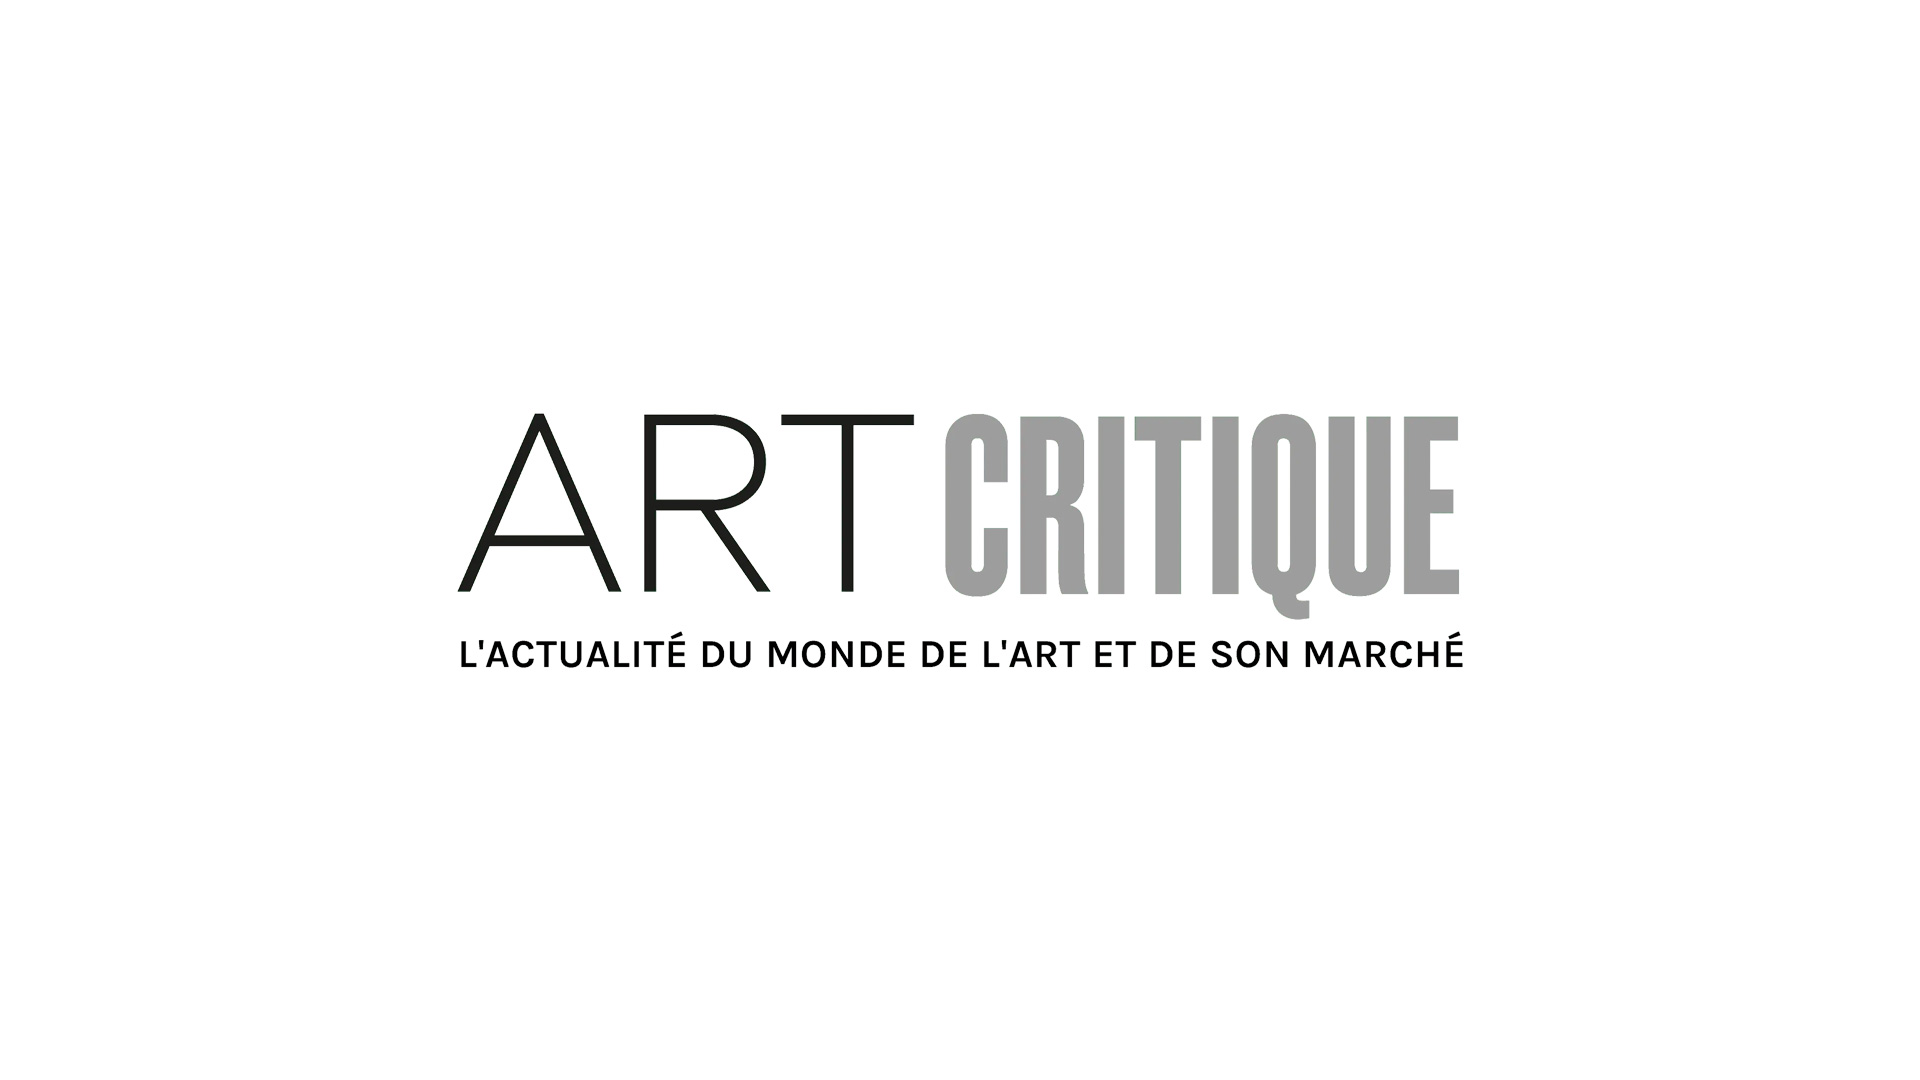 Jean-Baptiste Marot : « la peinture est un art martial ».